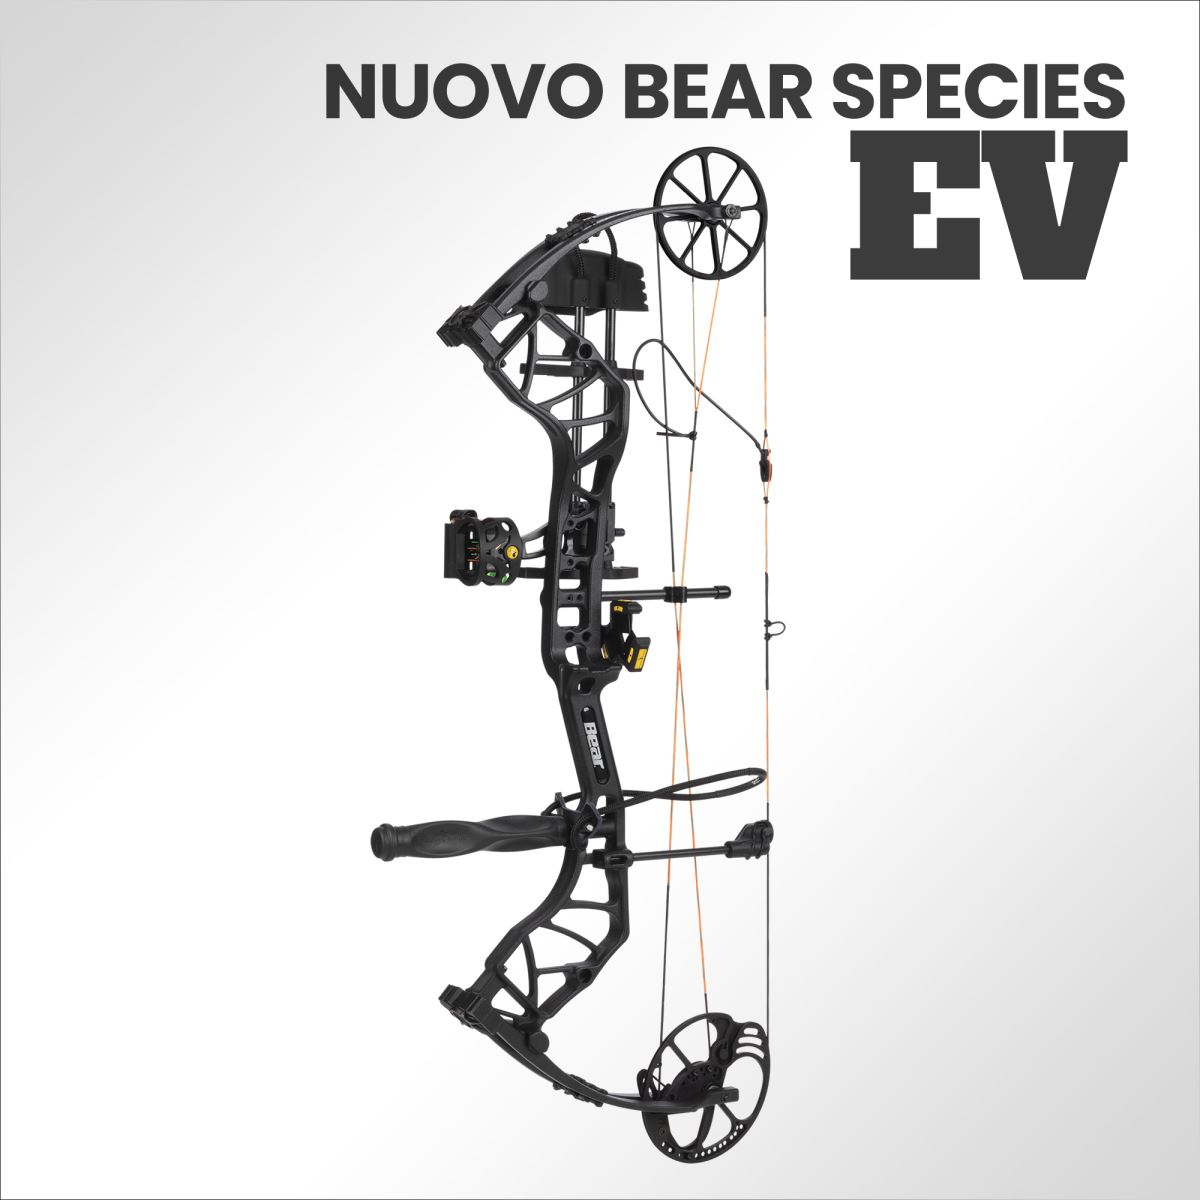 Nuovo Arco Compound Bear Species EV 2022